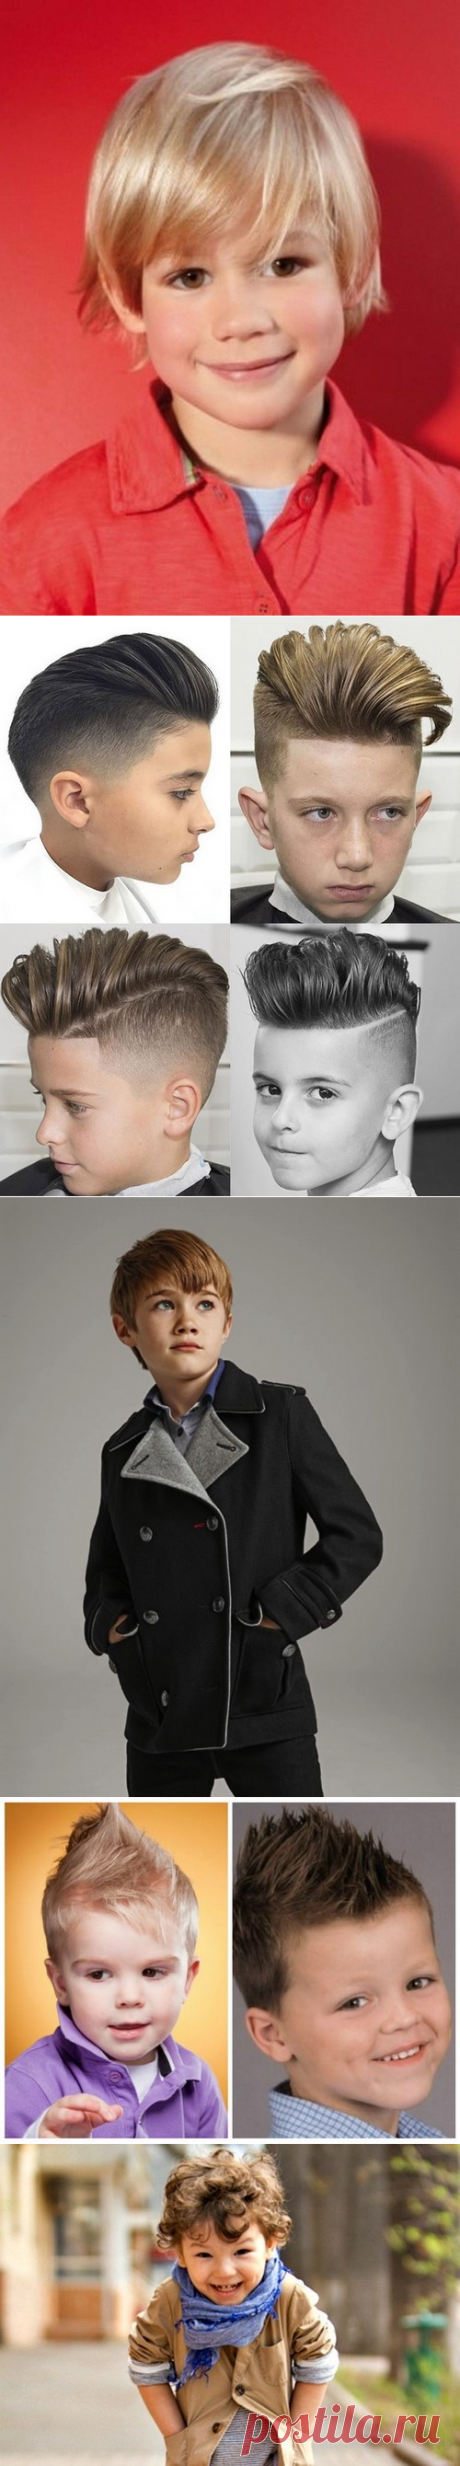 Идеи, как подстричься женщине, как подстричься мужчине, как подстричься мальчику и девочке | topxstyle.ru